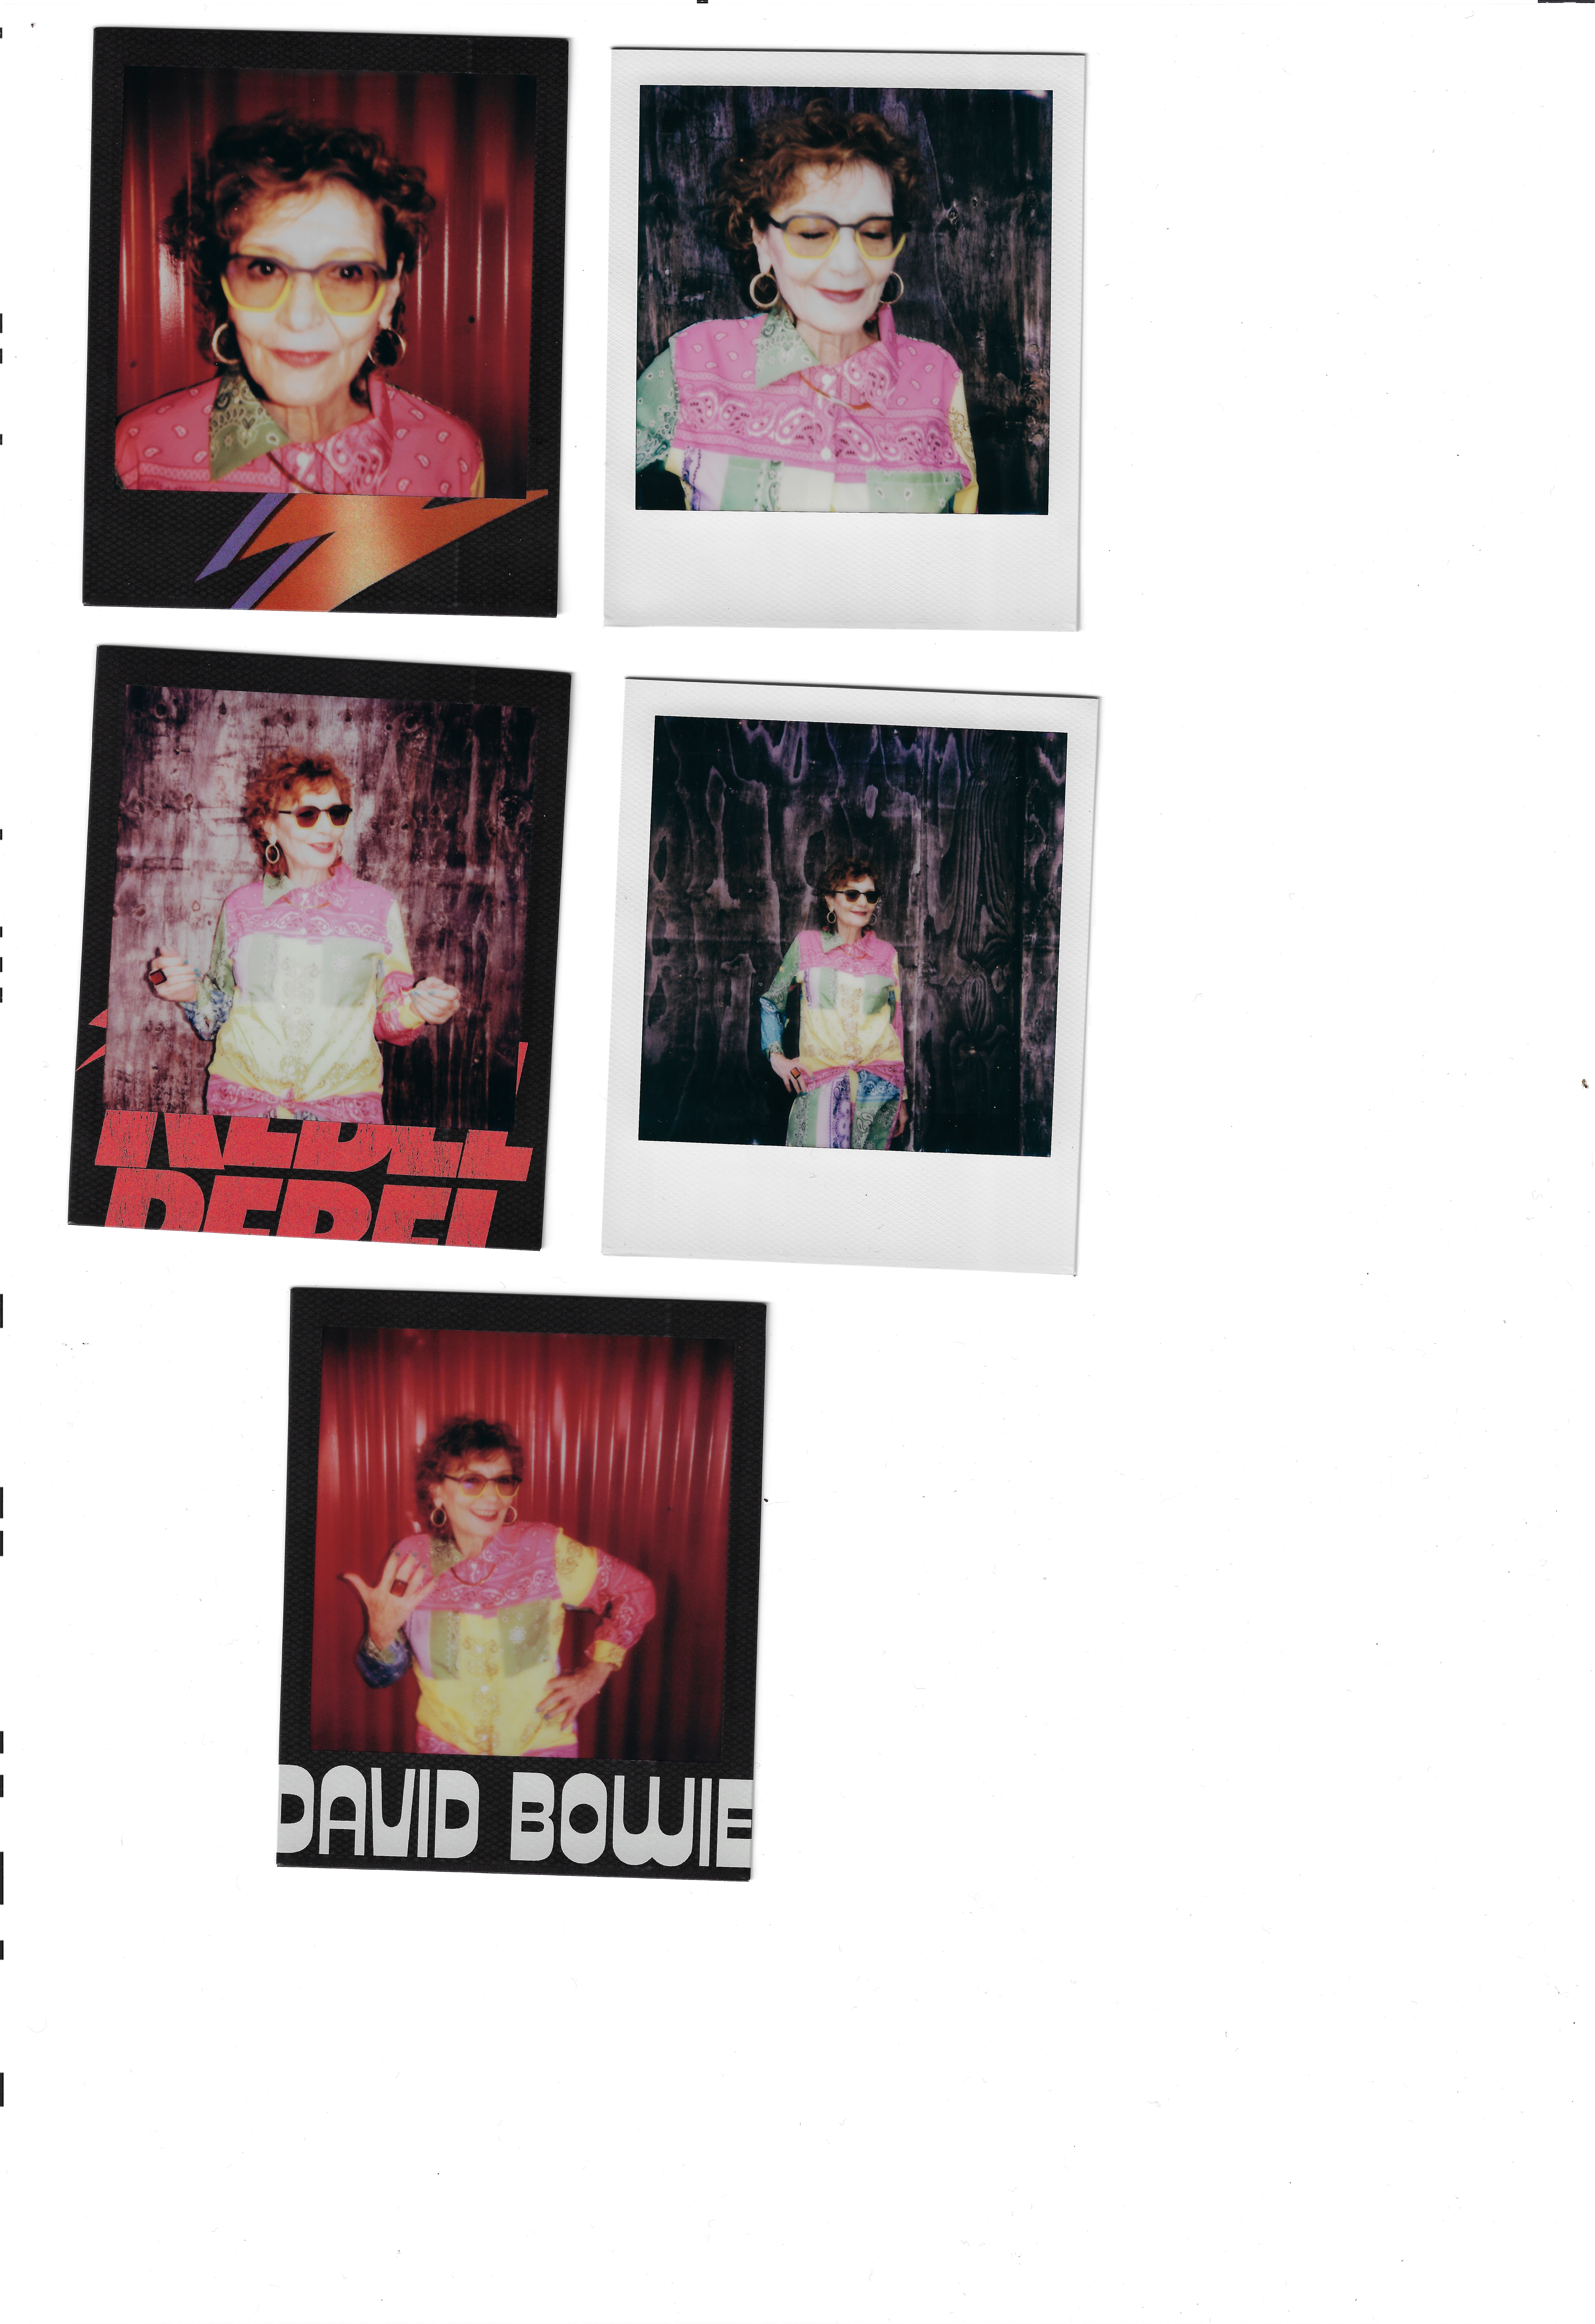 CJ Harvey and Vivien Goldman champion the experimental stamina of David Bowie